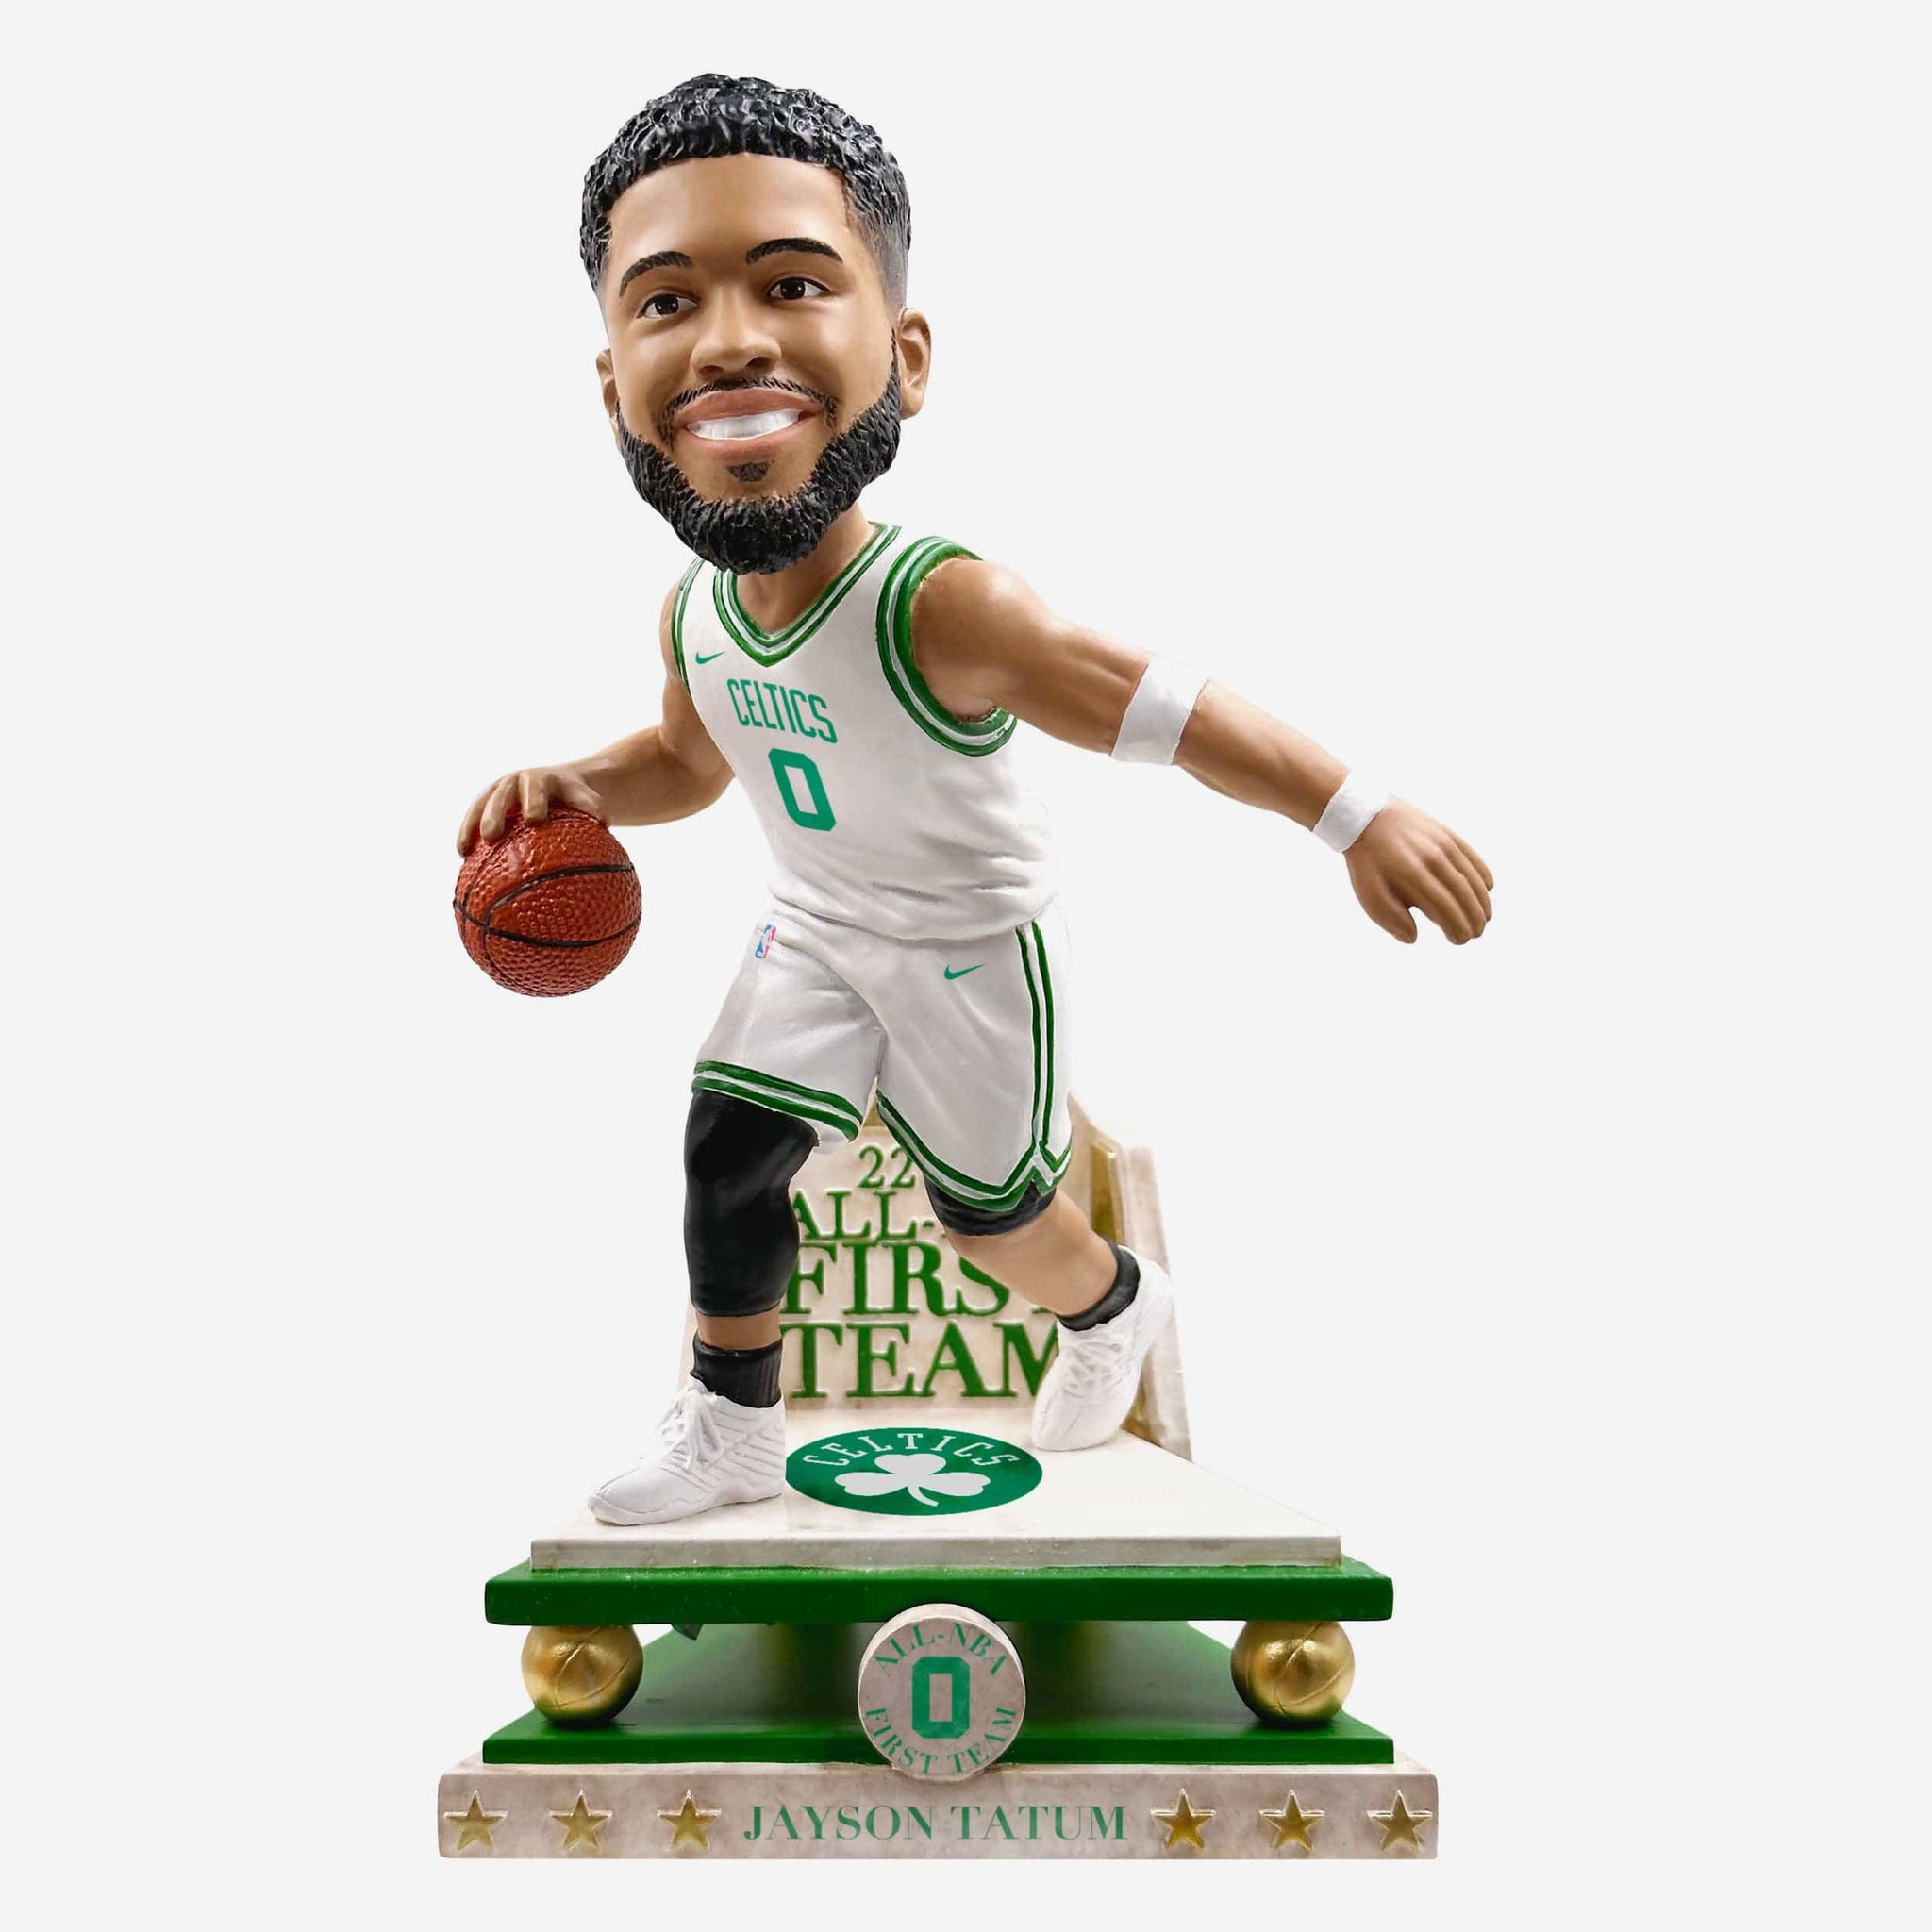 Boston Celtics' Jayson Tatum 'thankful' for making All-NBA first